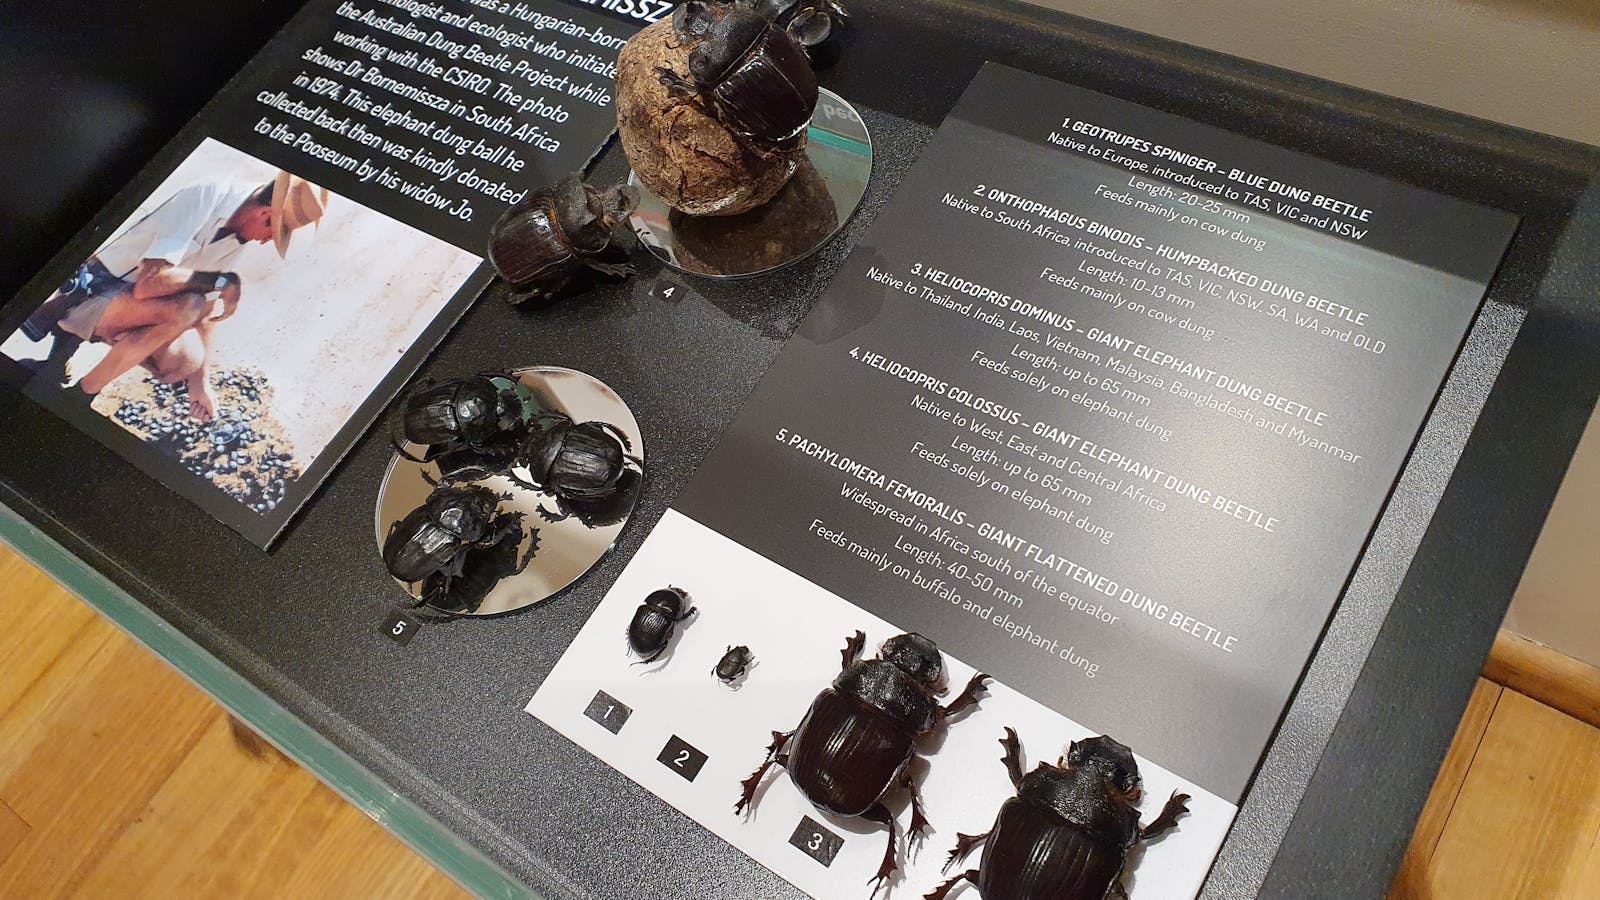 Dung beetle display